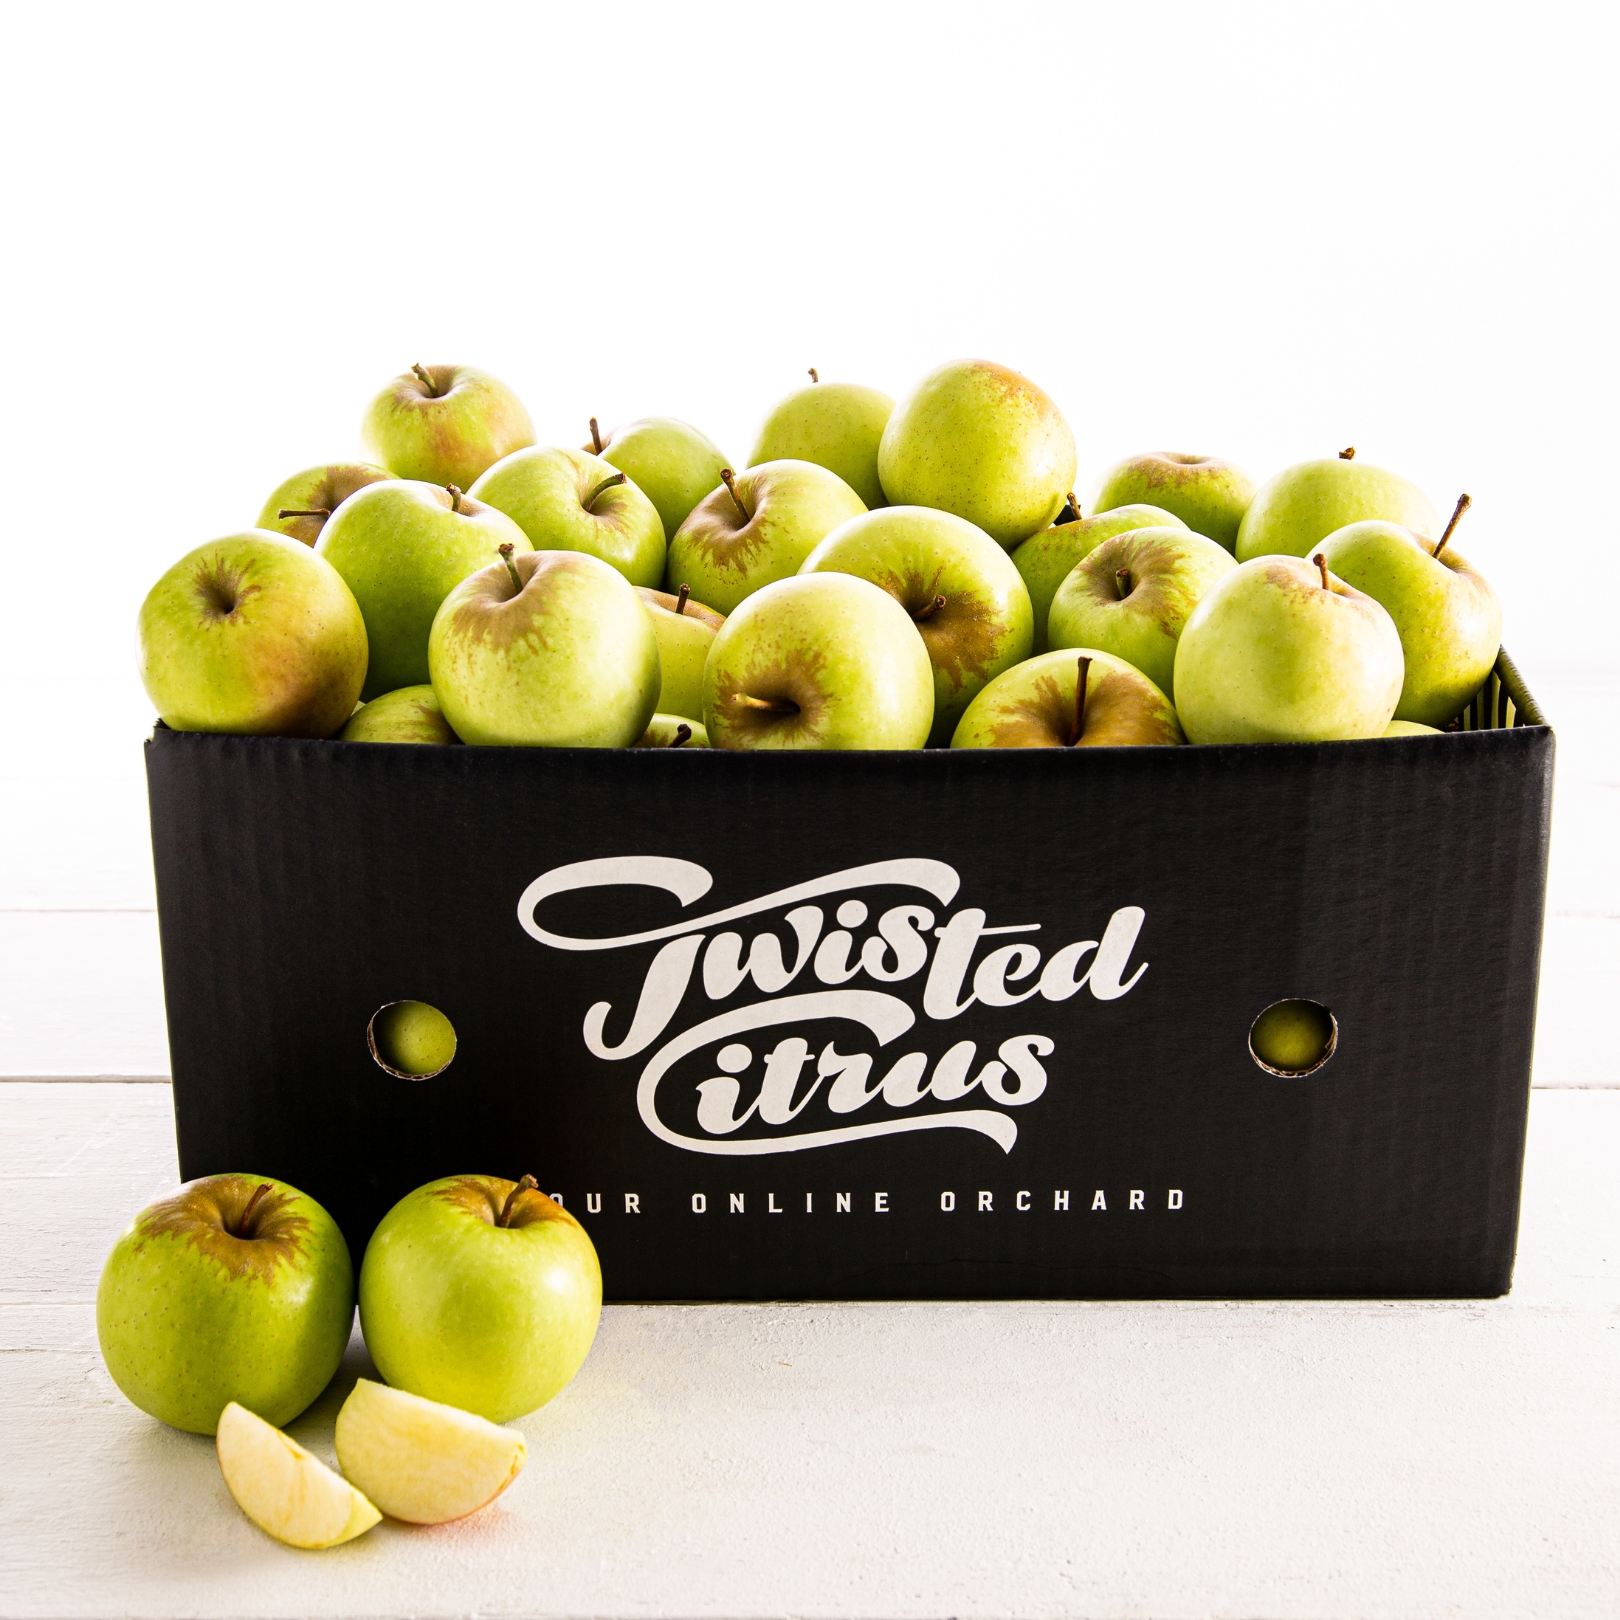 Buy Apples - Golden Delicious Online NZ - Twisted Citrus